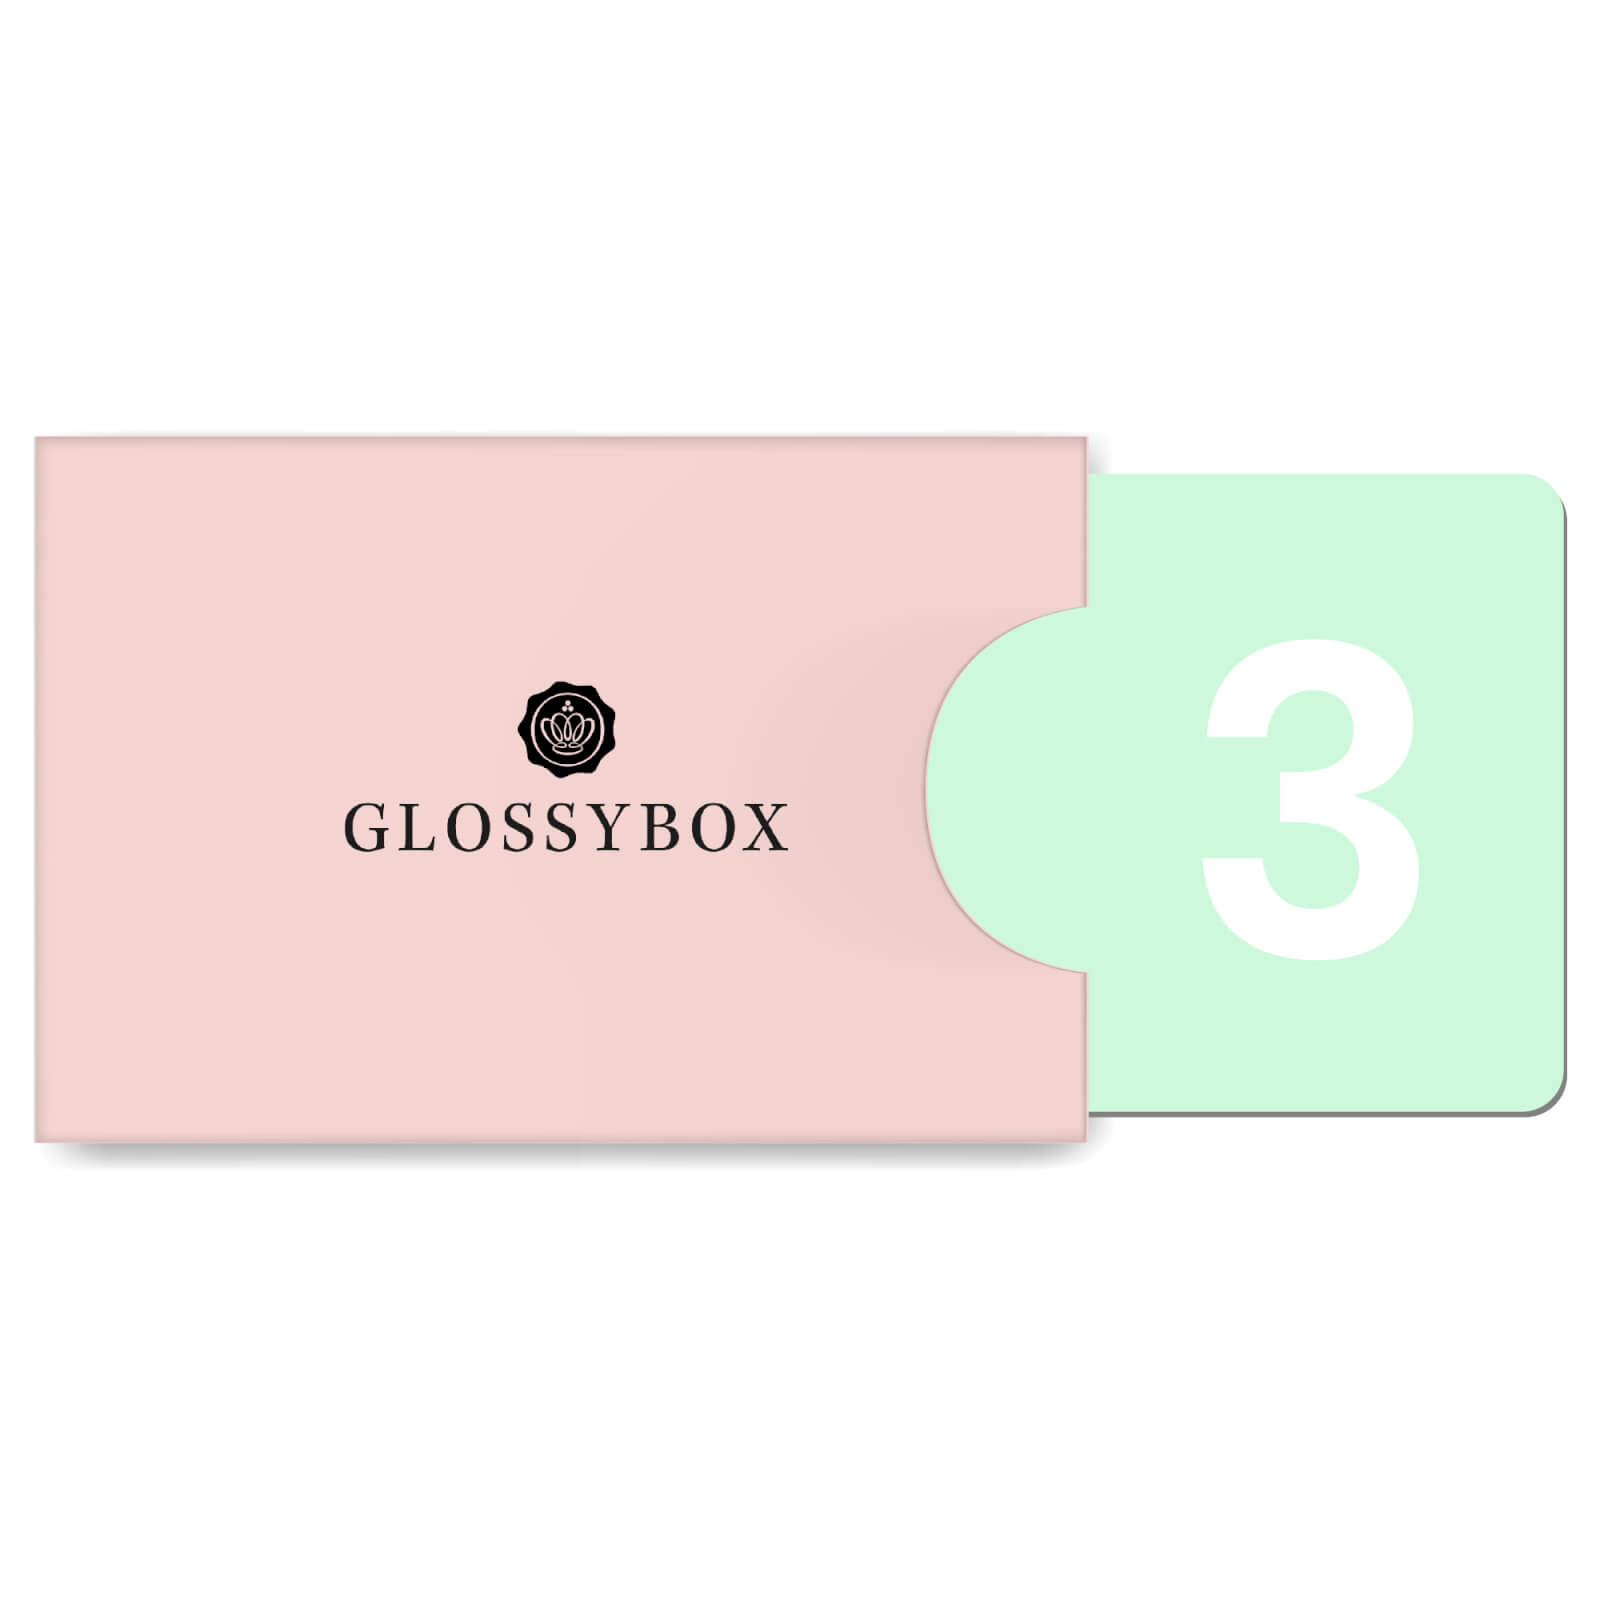 Glossy Box coupon: GLOSSYBOX eGift Voucher - 3 Month Plan